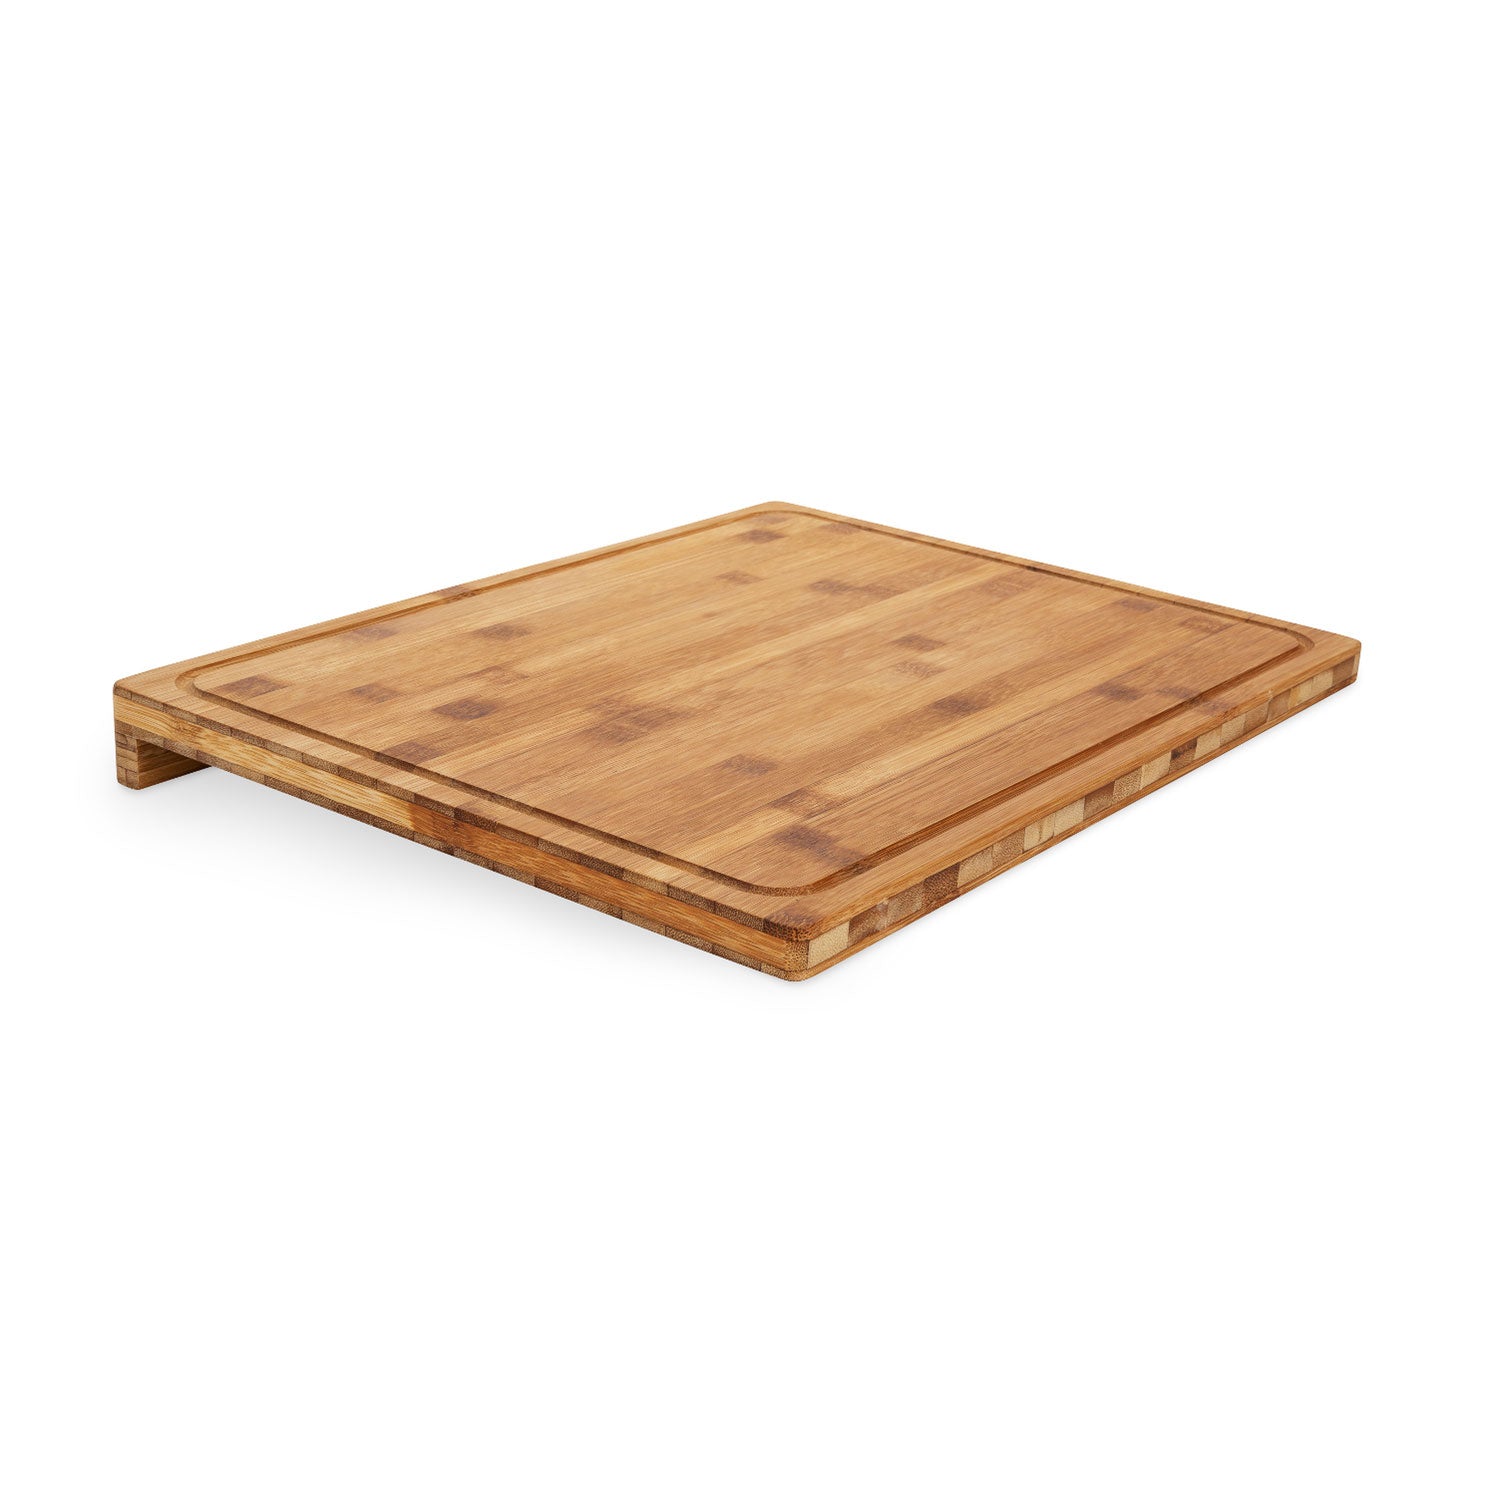 Camco 43545 Bamboo Cutting Board with Counter Edge - 18" x 14" x 1.75"